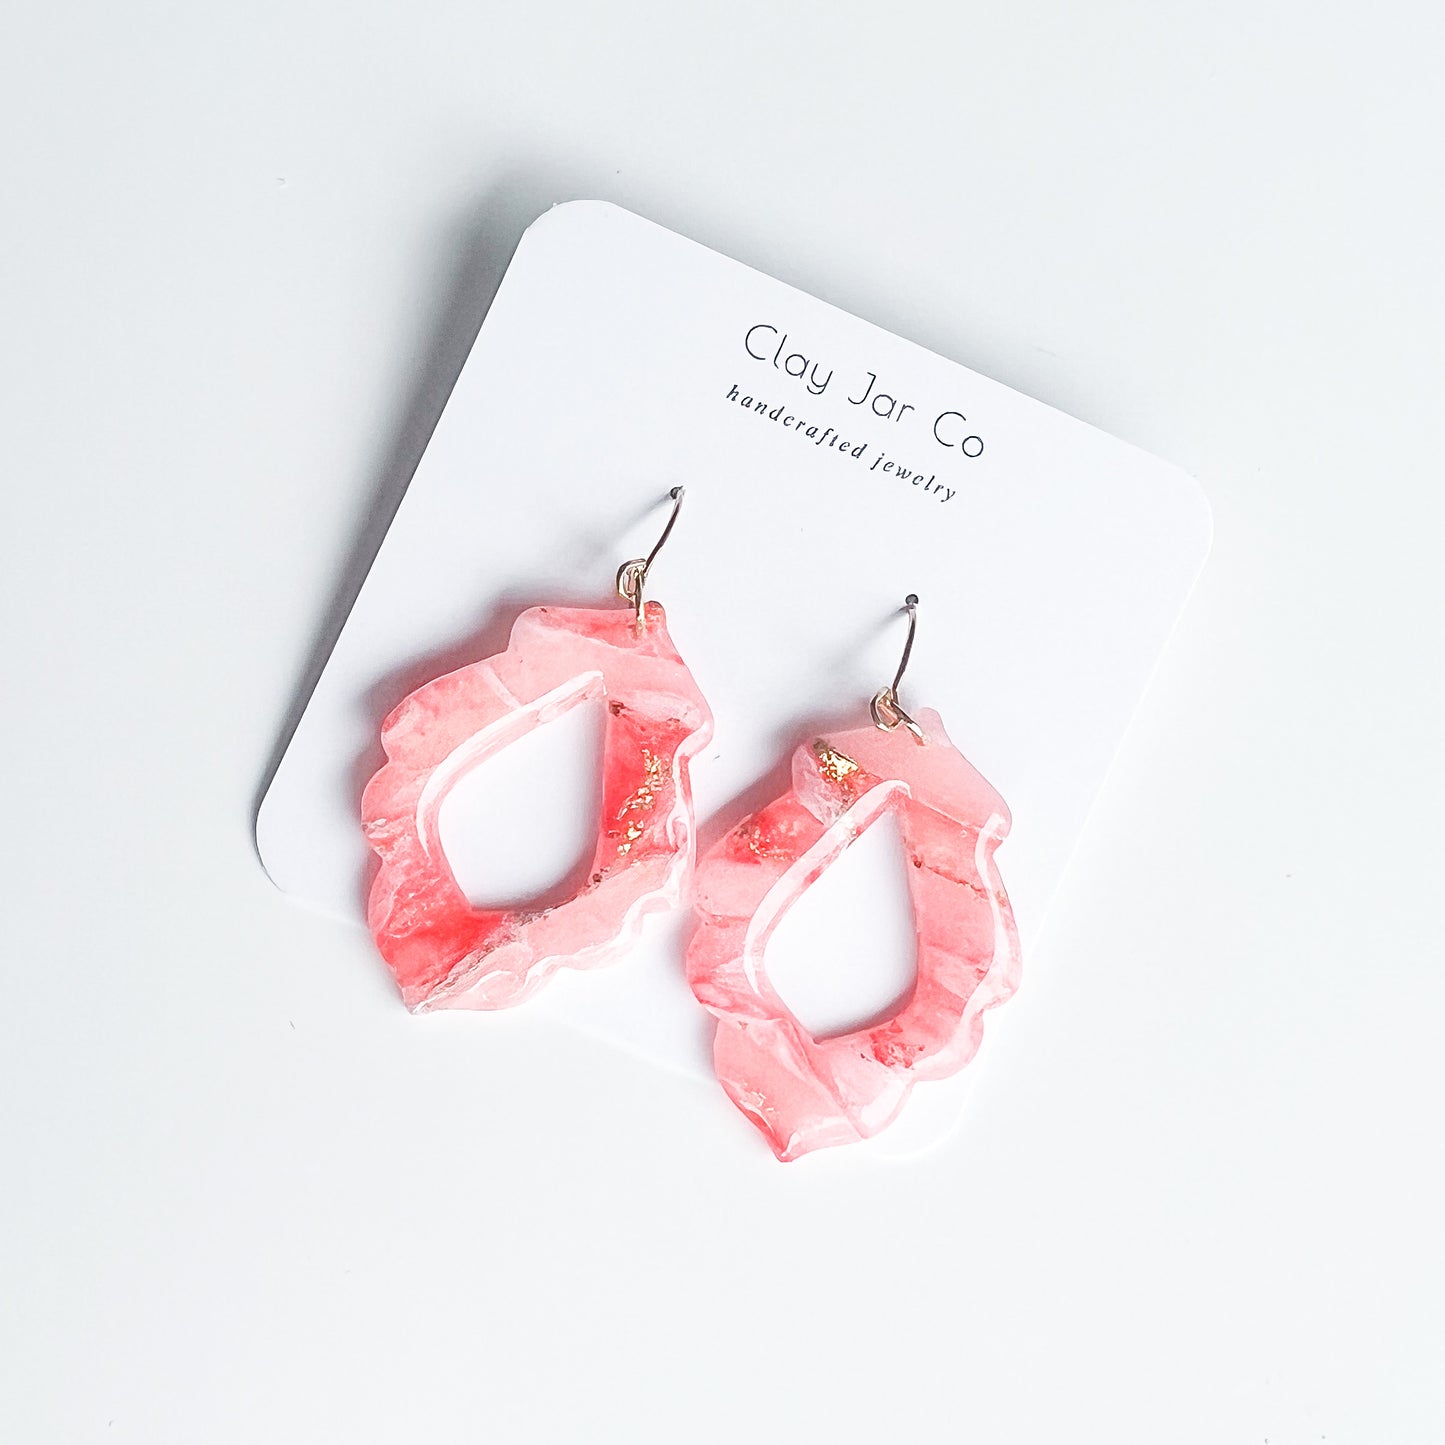 Grace Dangle Earrings in Pink Quartz with Gold Hooks